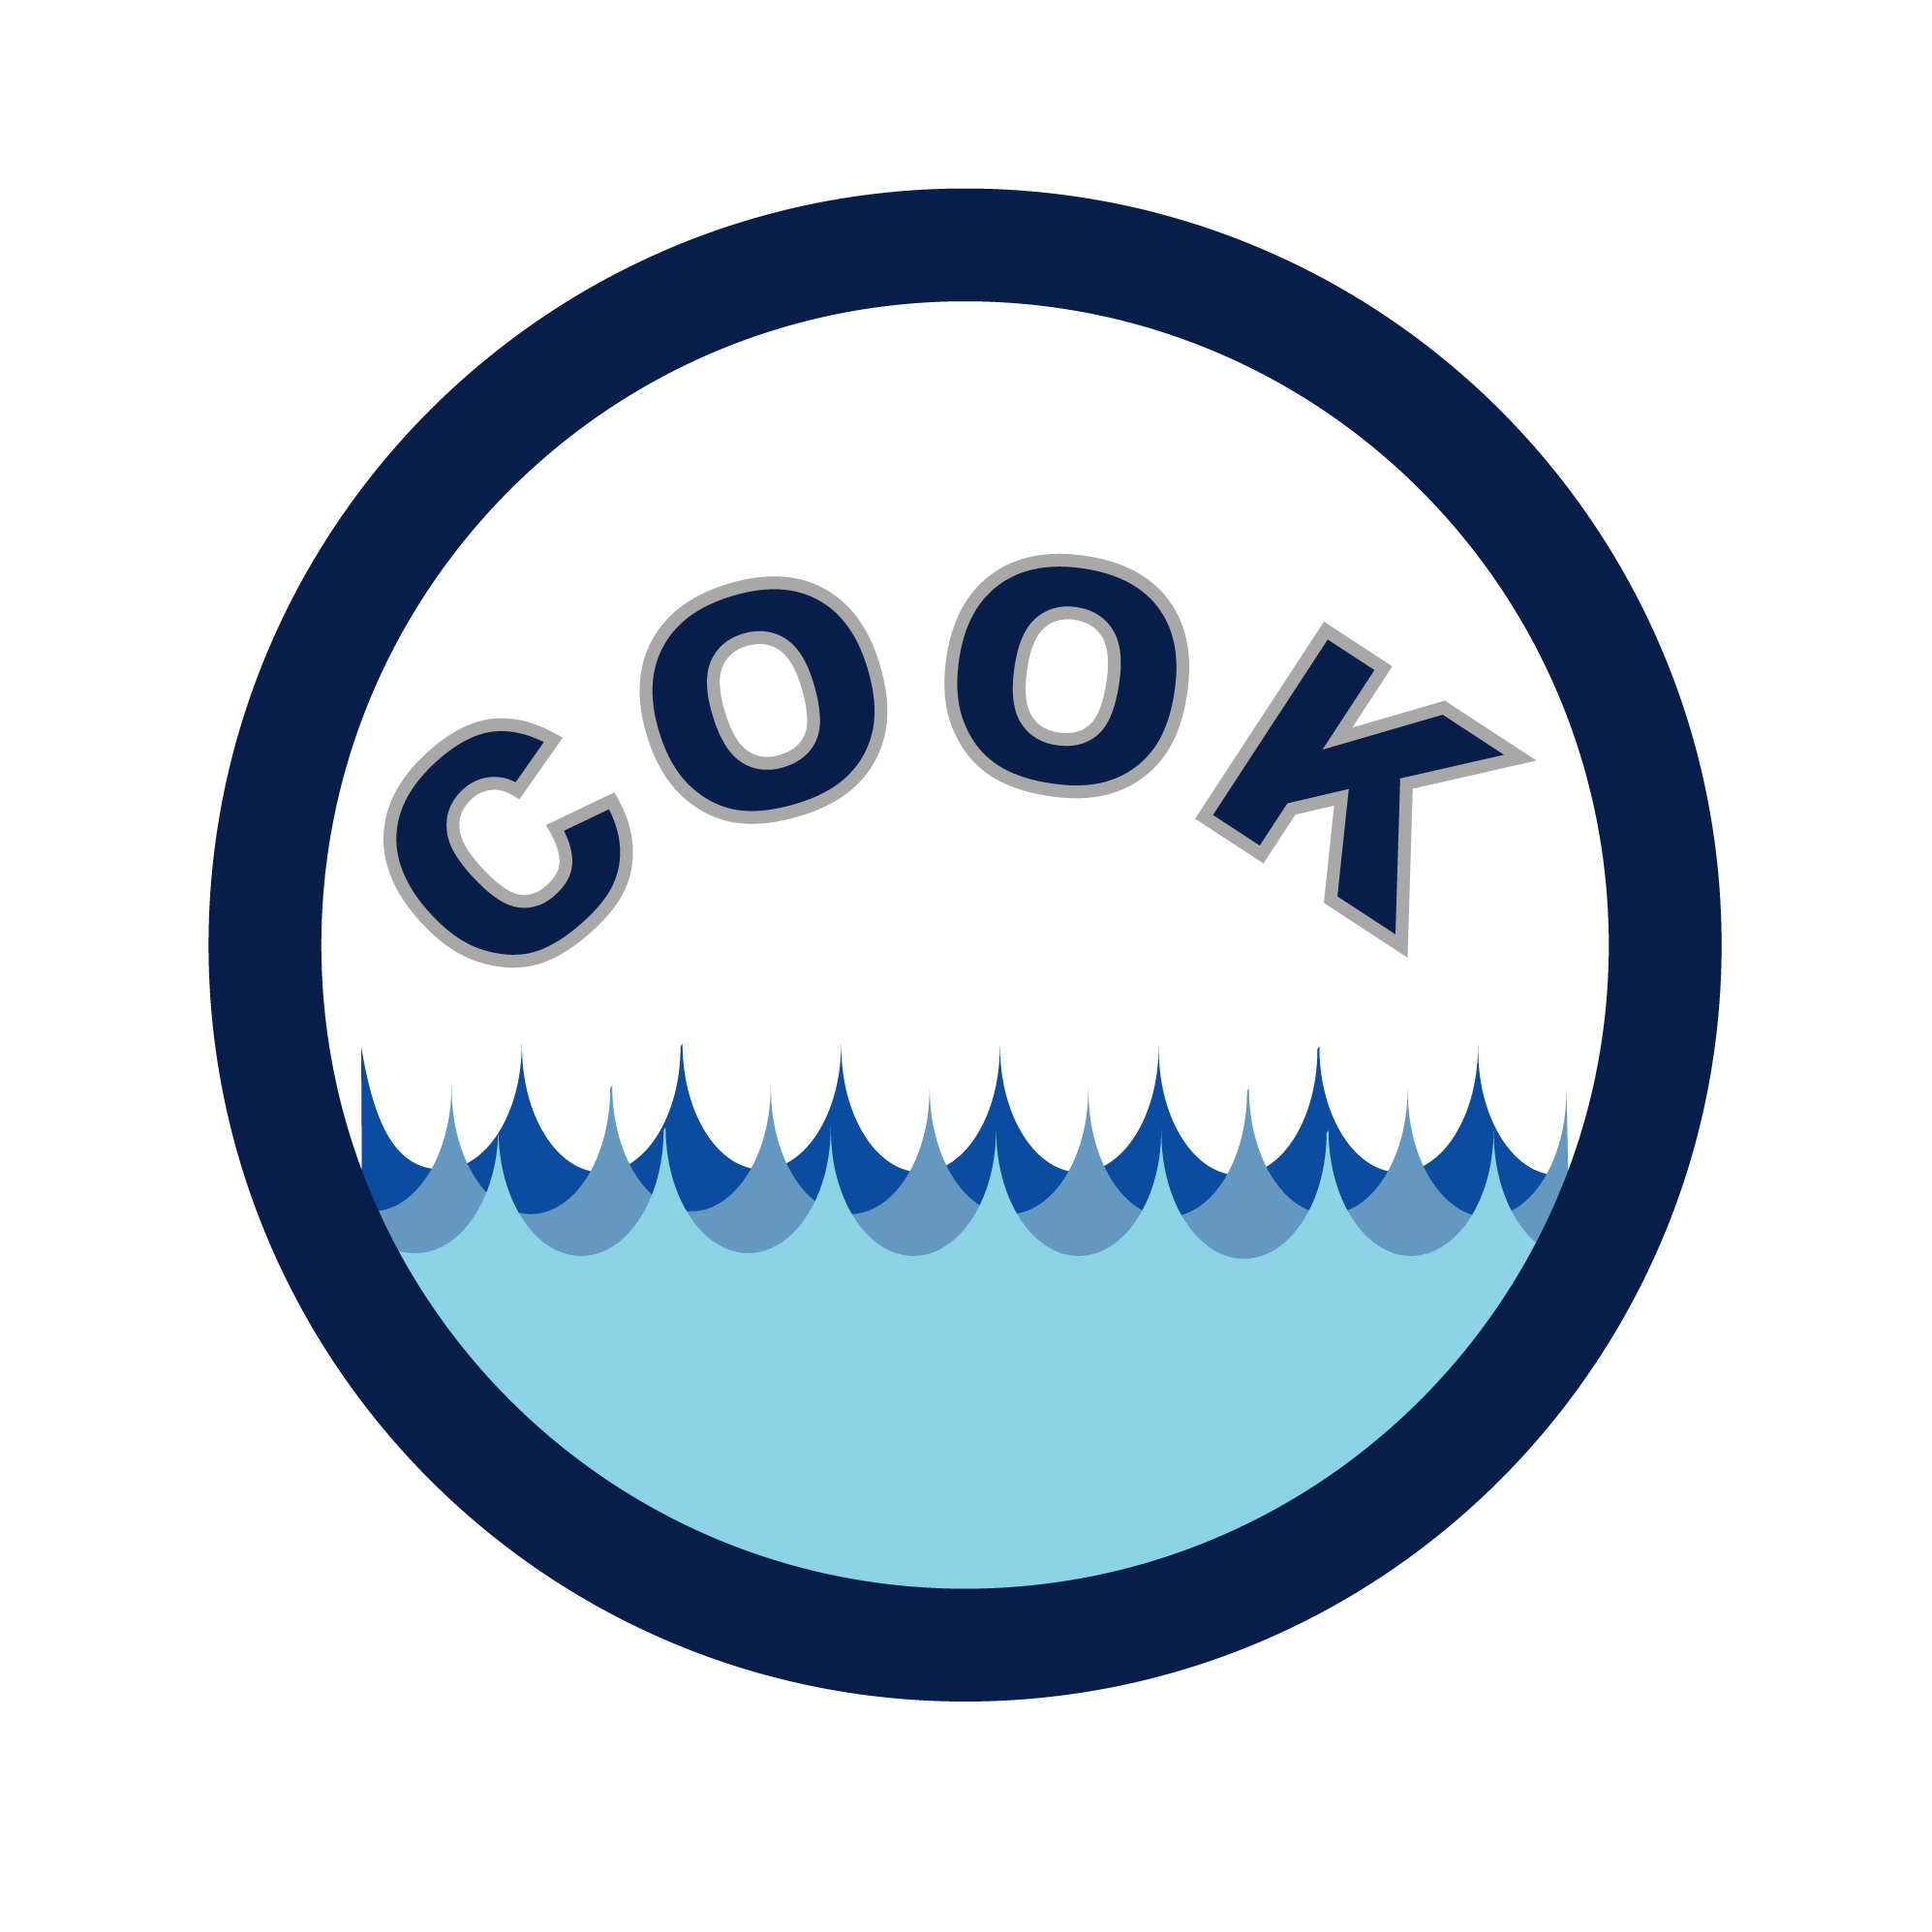 Fred A. Cook Jr. Inc. Logo